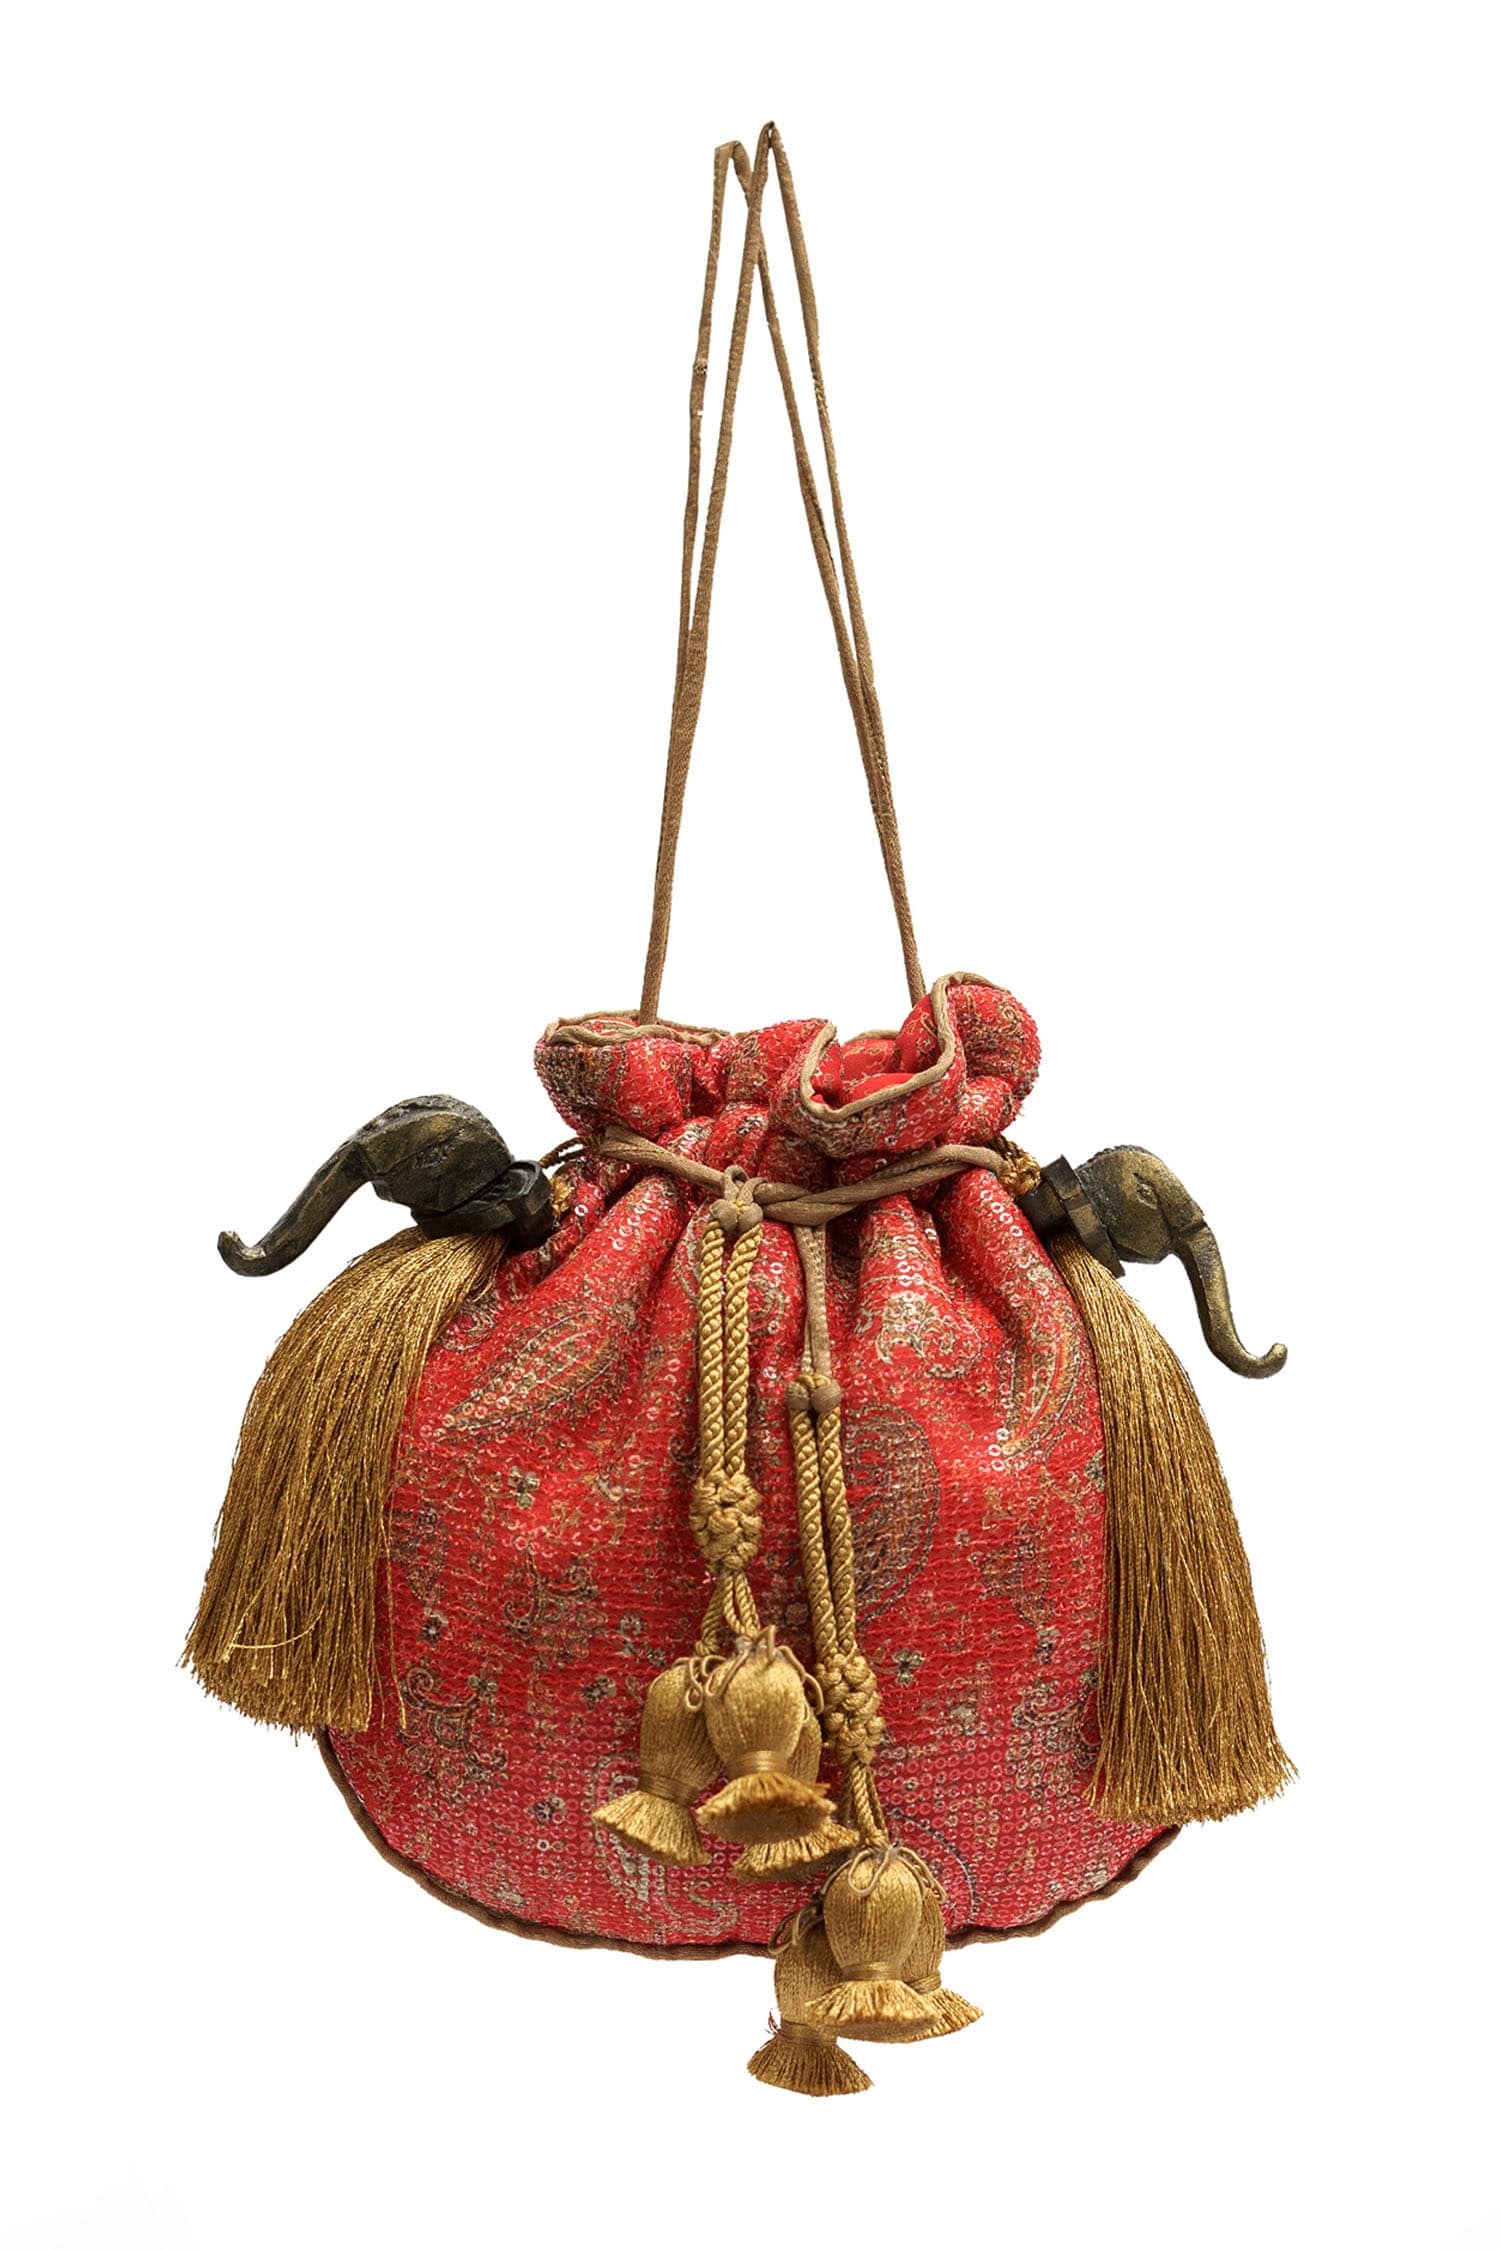 Vintage 90s Light Boho Indian Woven Textile Shoulder Bag Purse Handbag |  Purses and handbags, Purses and bags, Bags